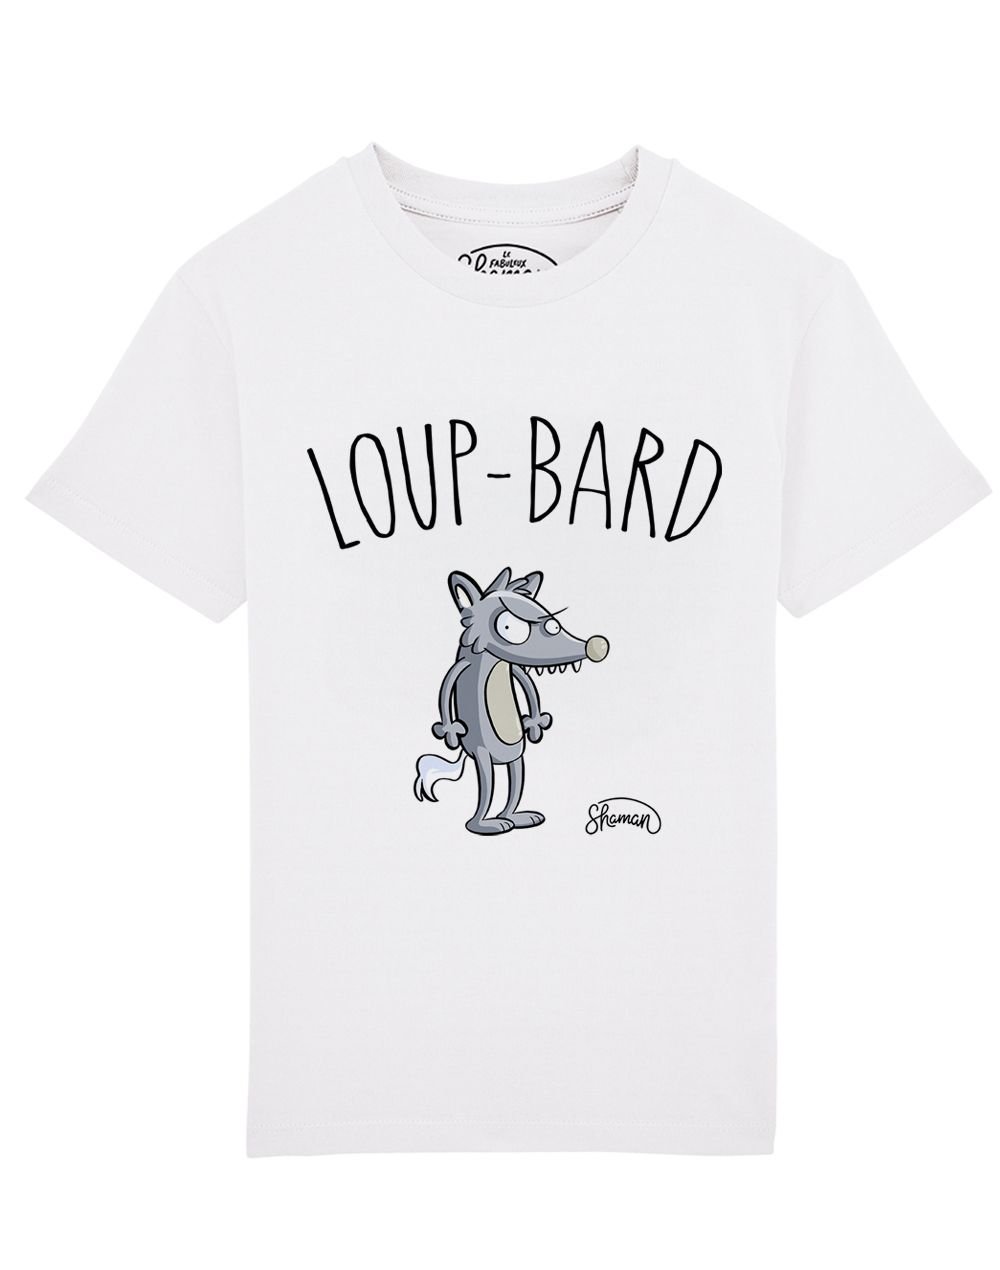 Tee shirt Loup bard